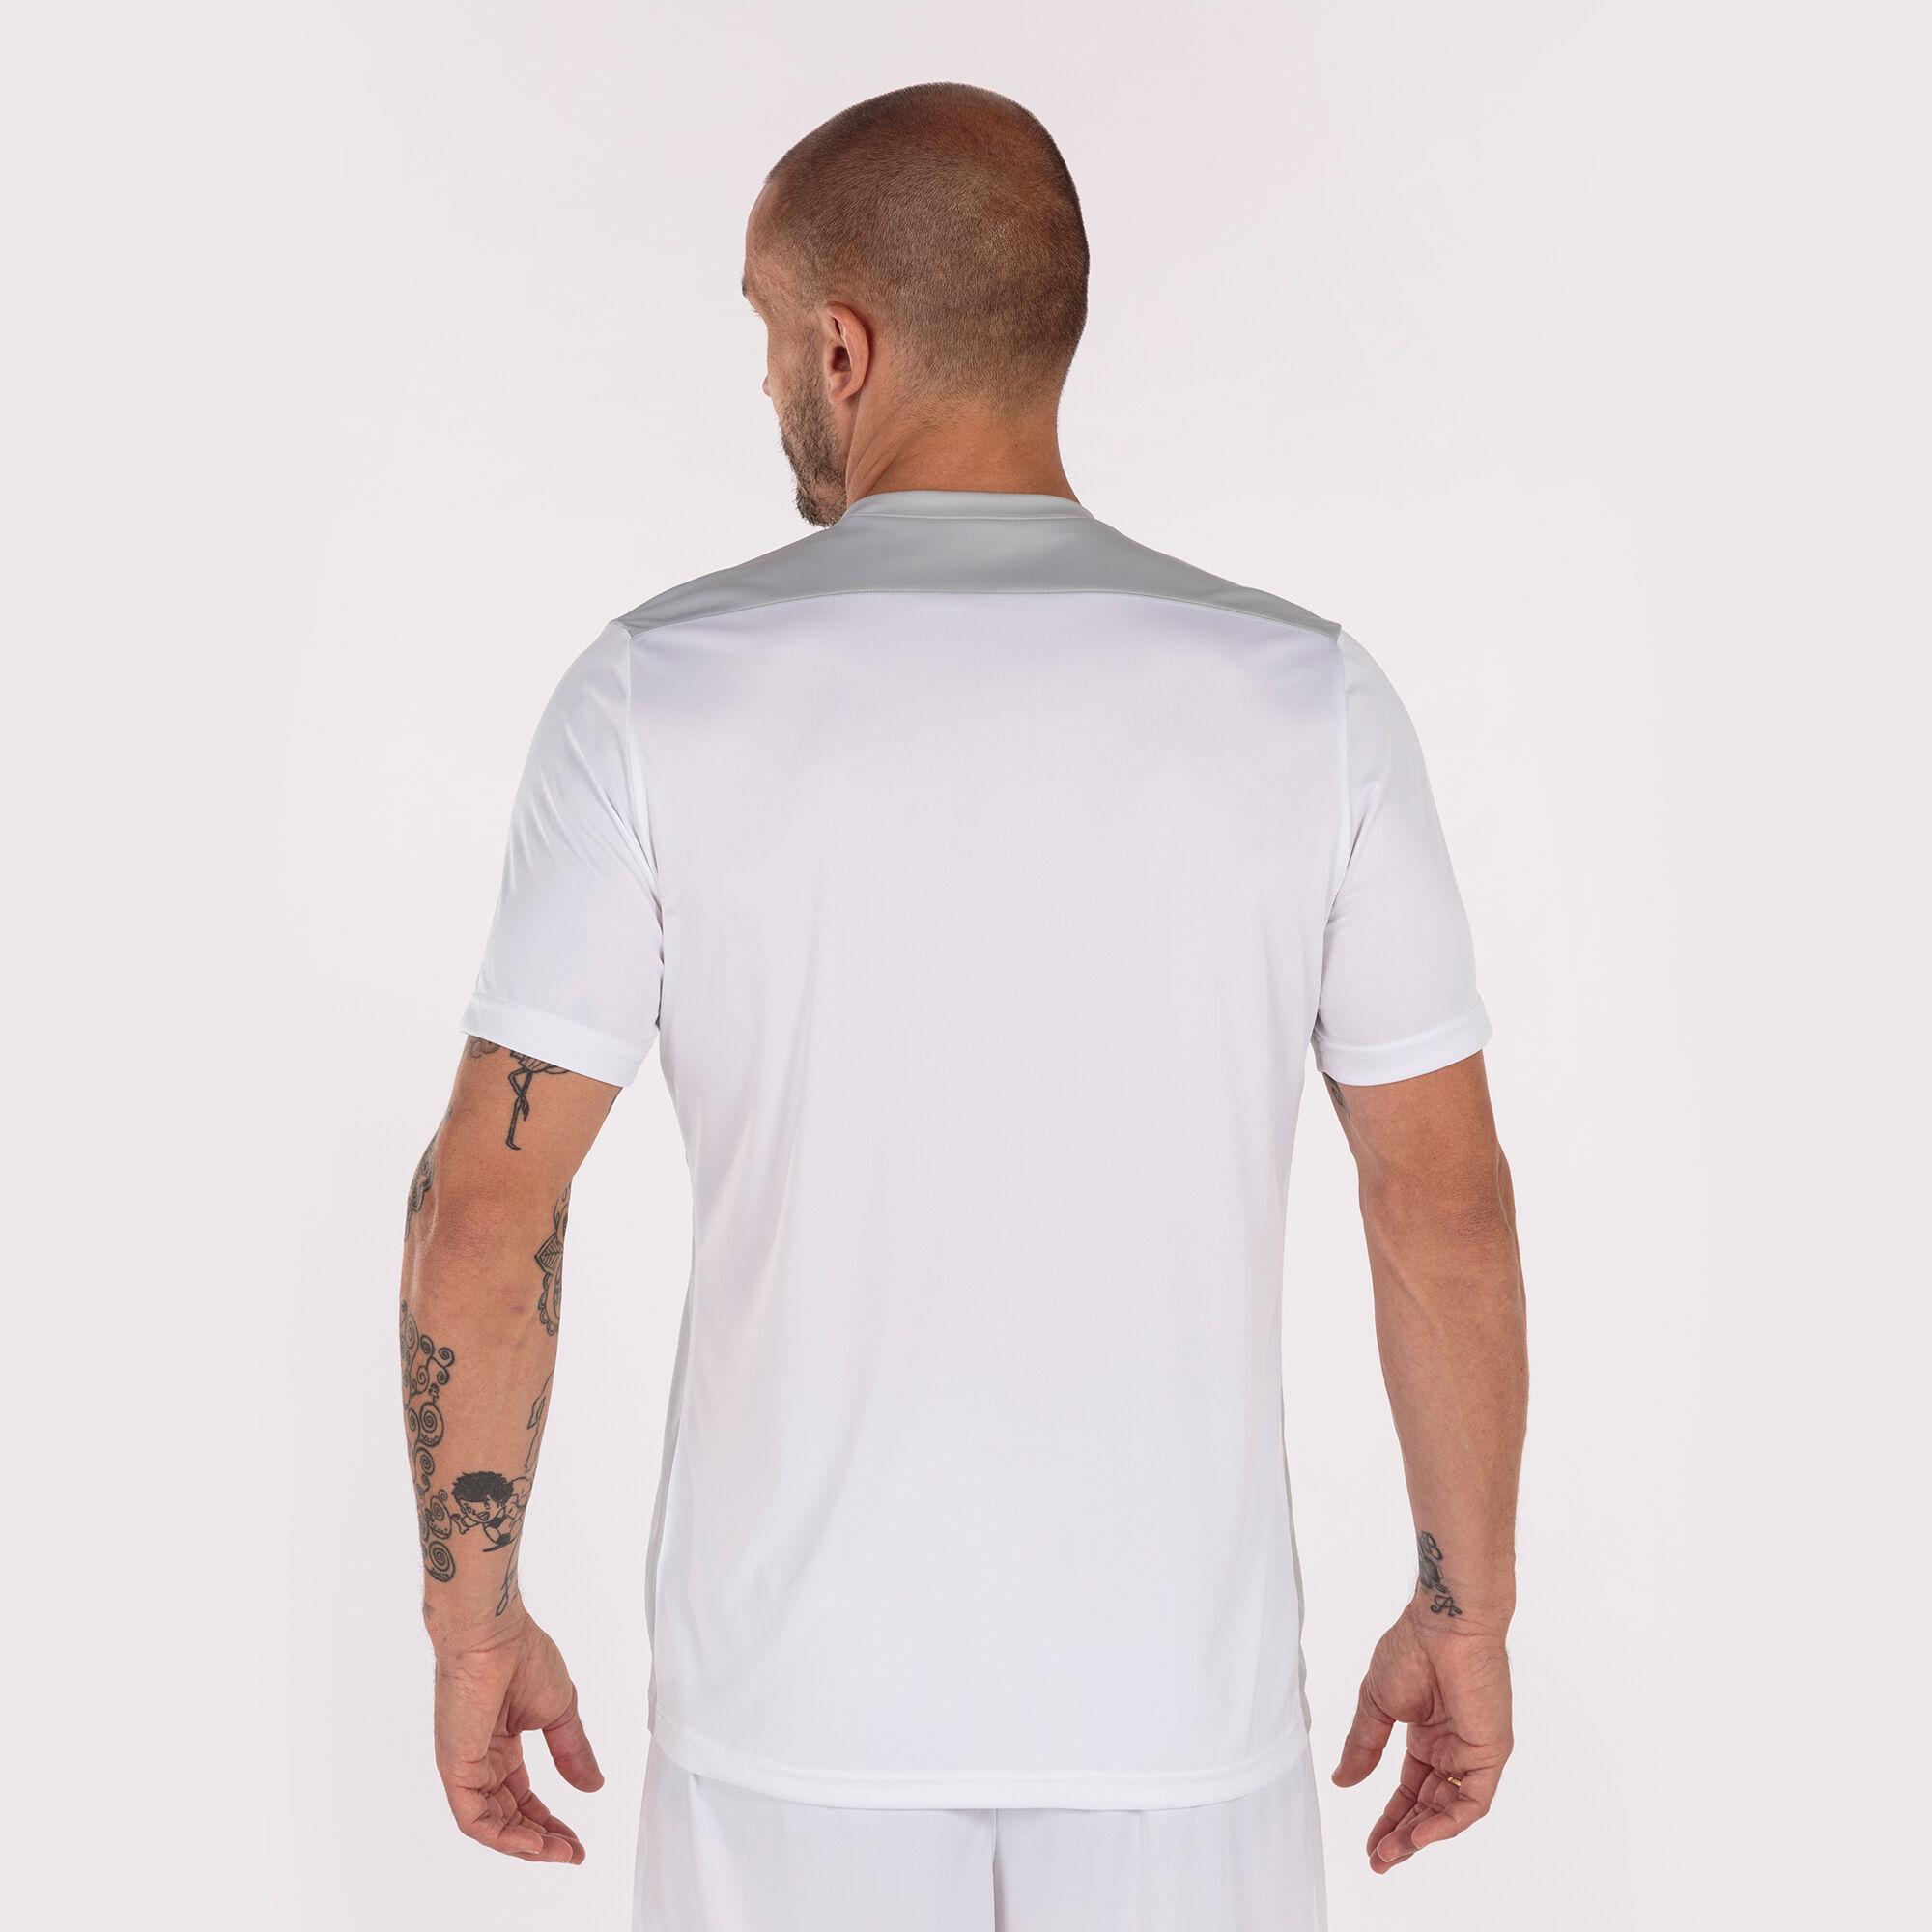 Camiseta manga corta hombre Championship VI blanco gris